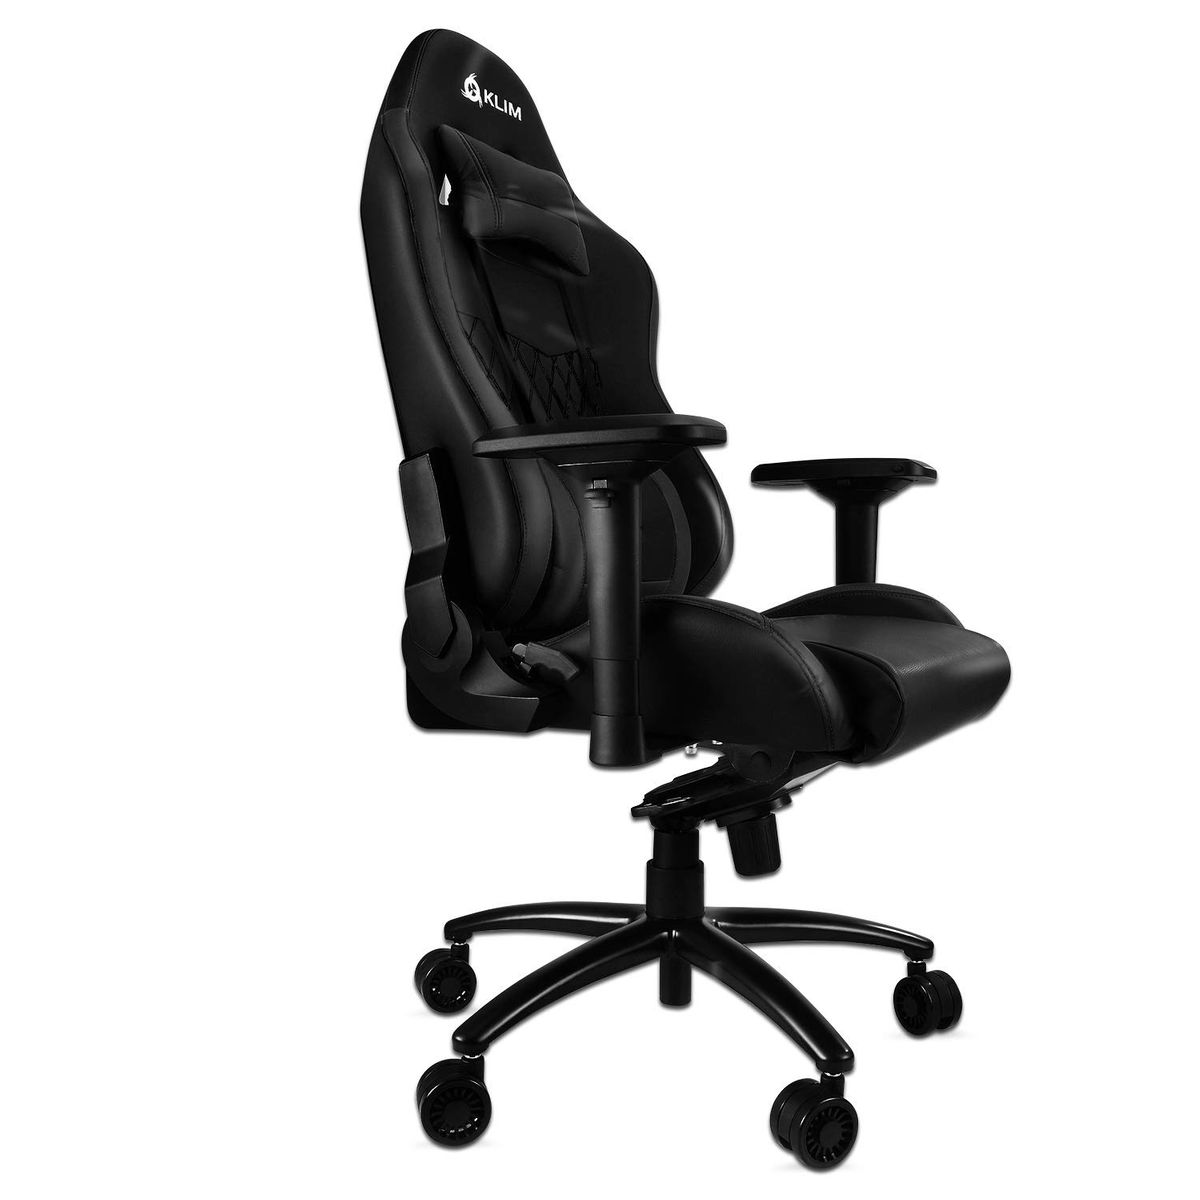 KLIM Esports Gaming Chair Fully Adjustable